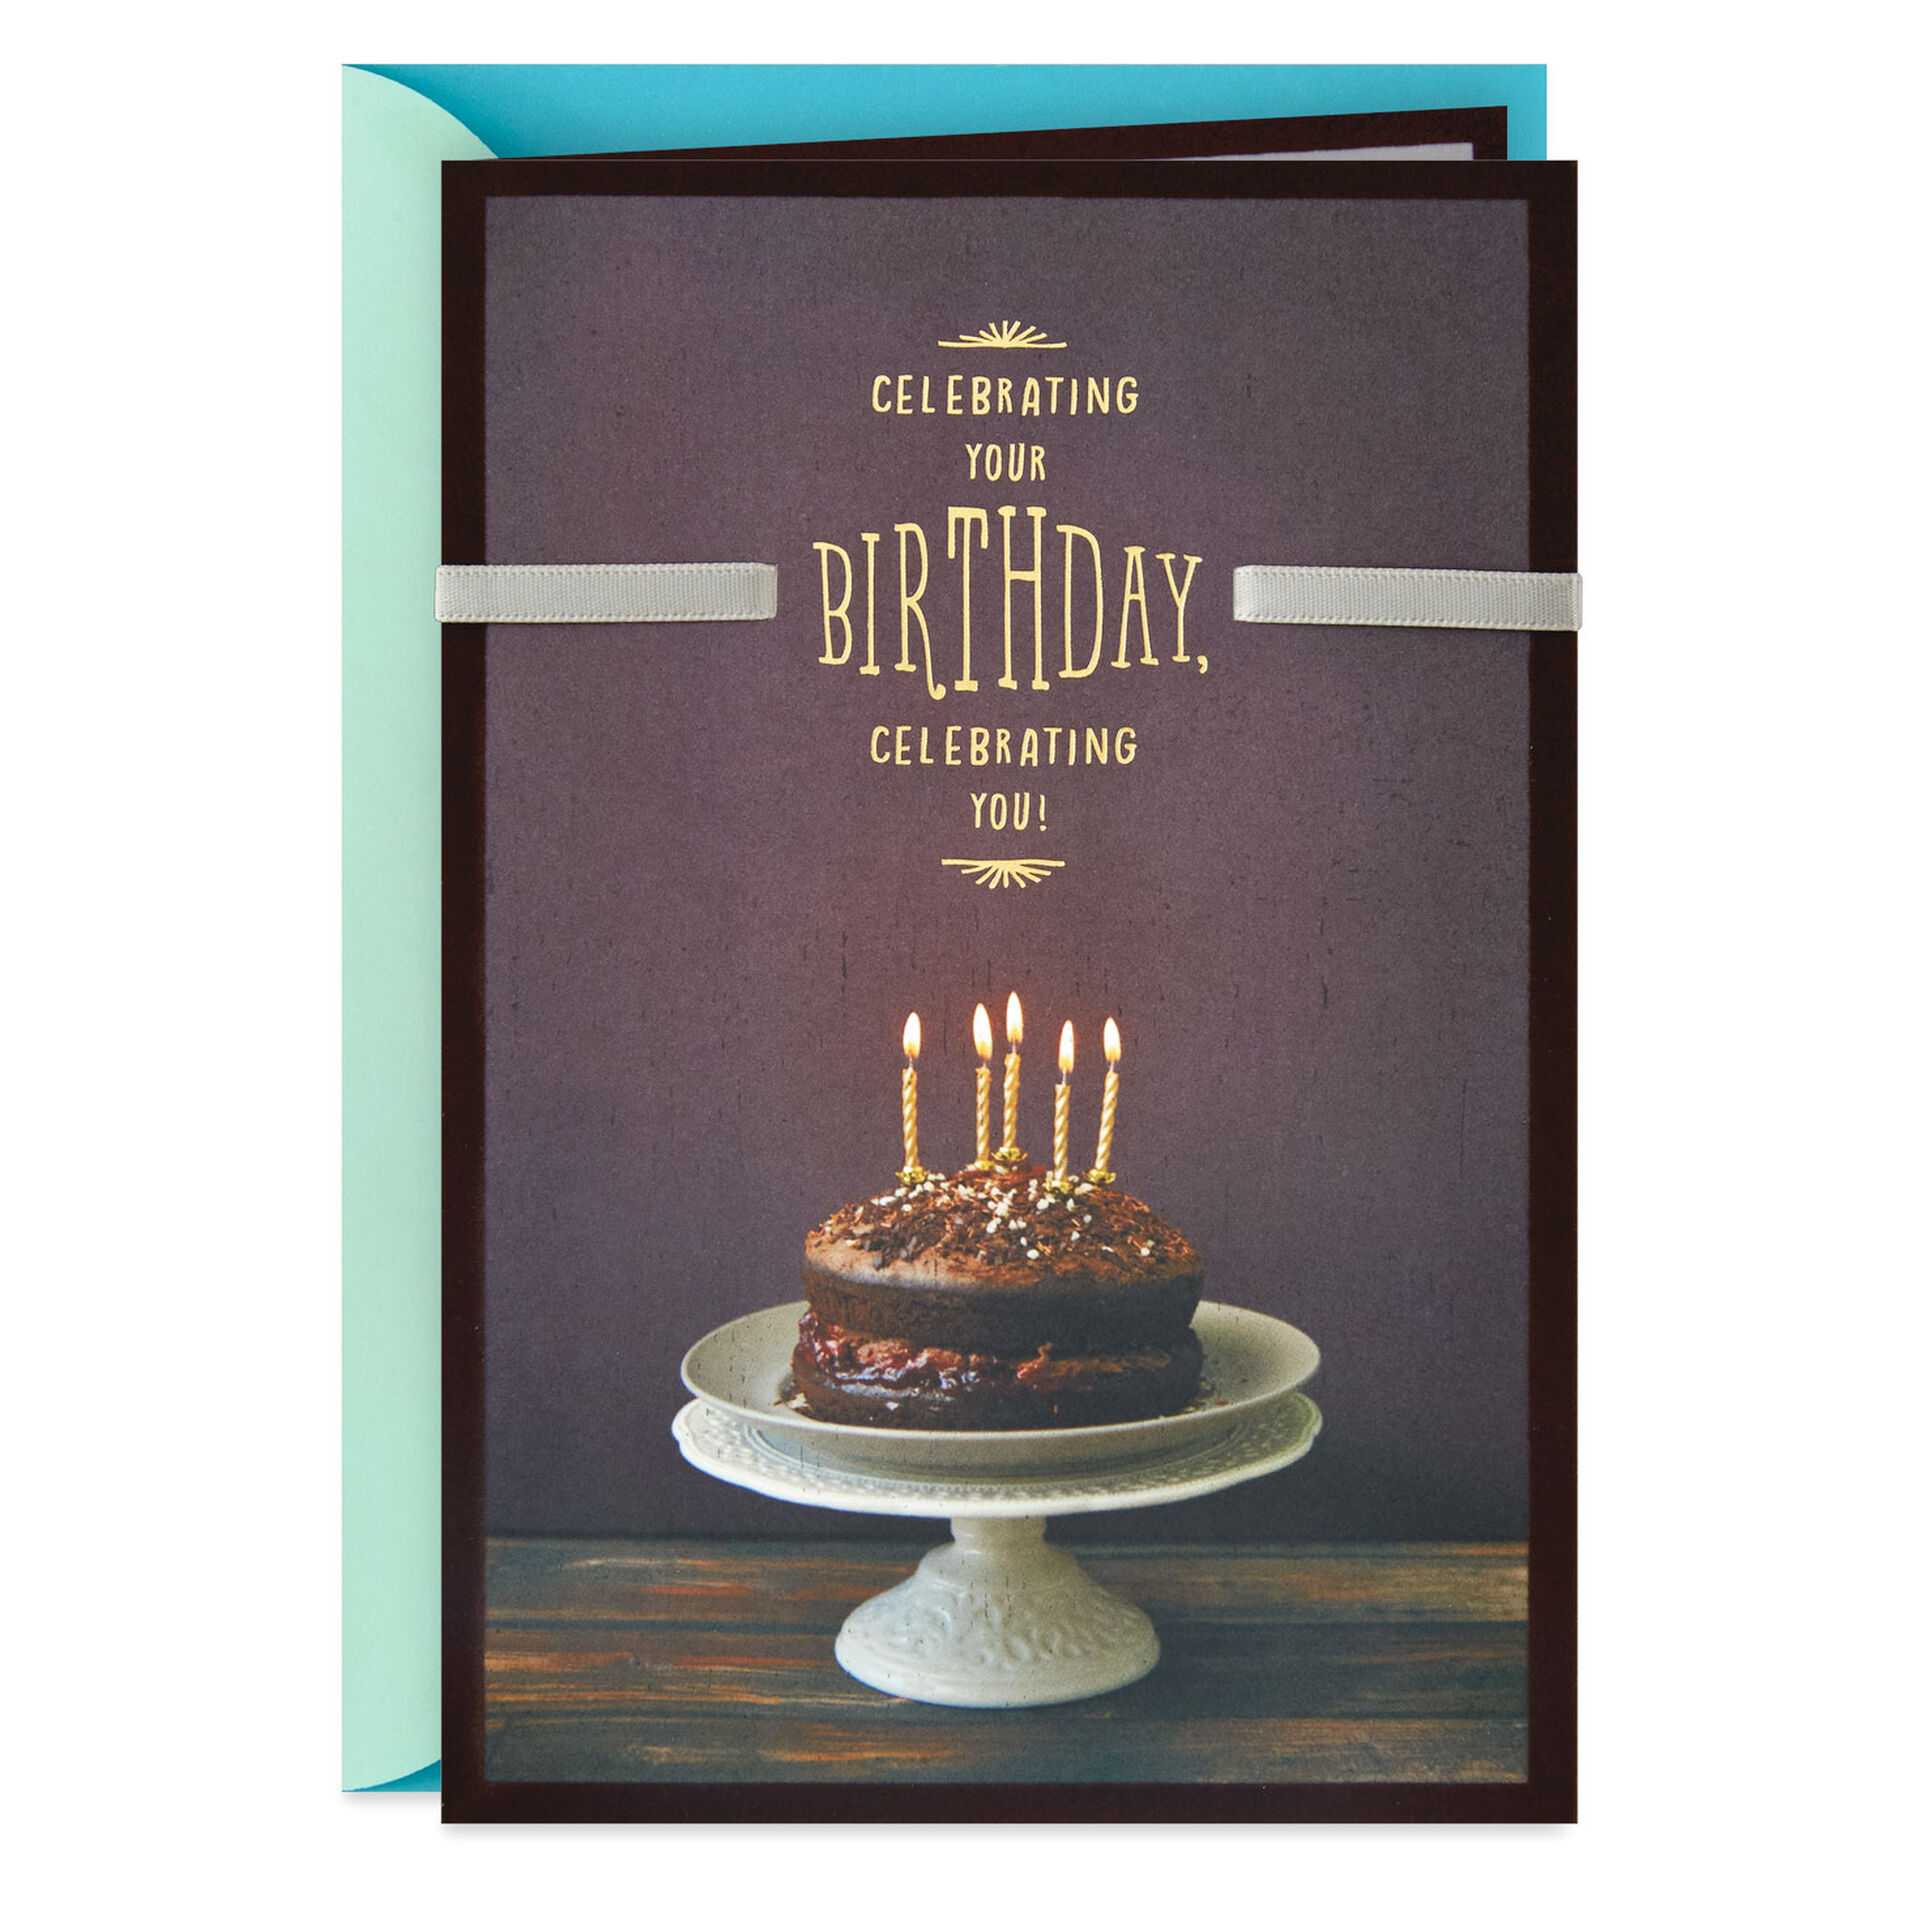 Homemade-Chocolate-Cake-SoninLaw-Birthday-Card_659MAN3391_01